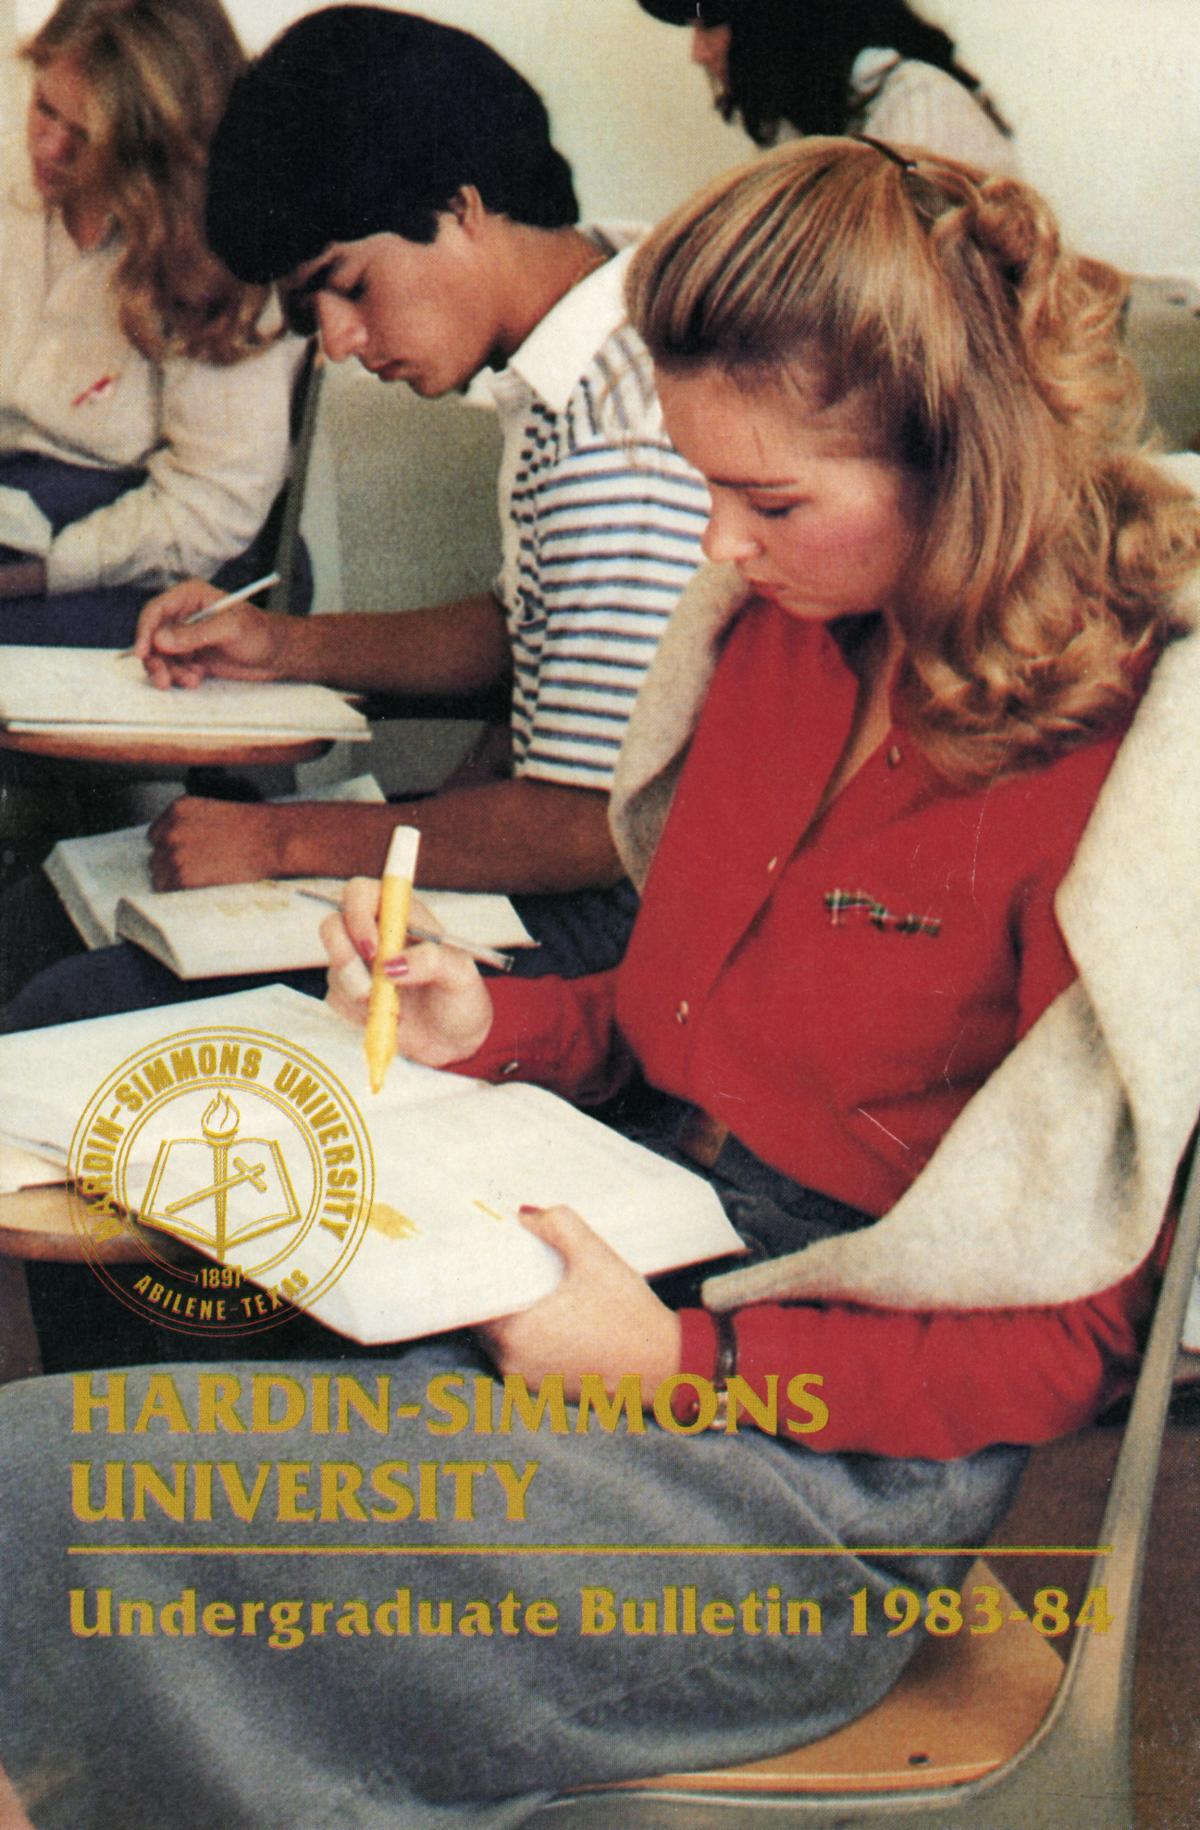 Catalog of Hardin-Simmons University, 1983-1984 Undergraduate Bulletin
                                                
                                                    Front Cover
                                                